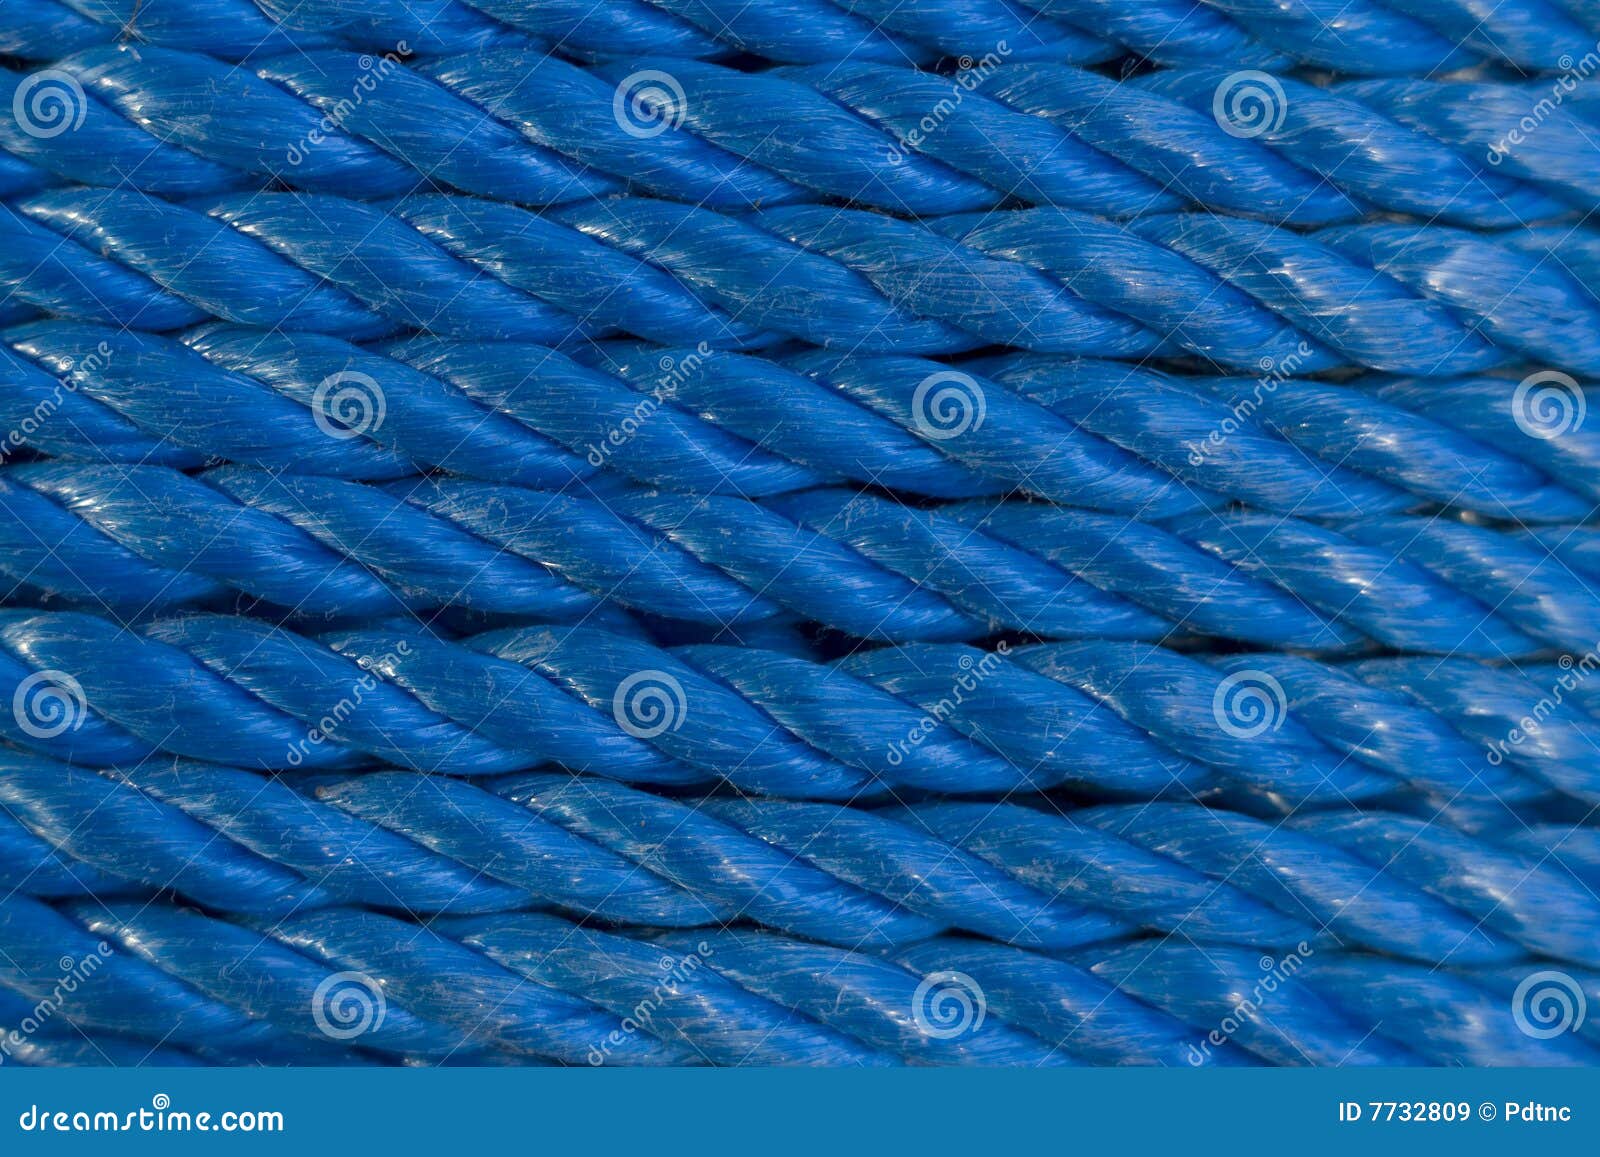 Coiled Blue Nylon Rope Background Stock Image - Image of rope